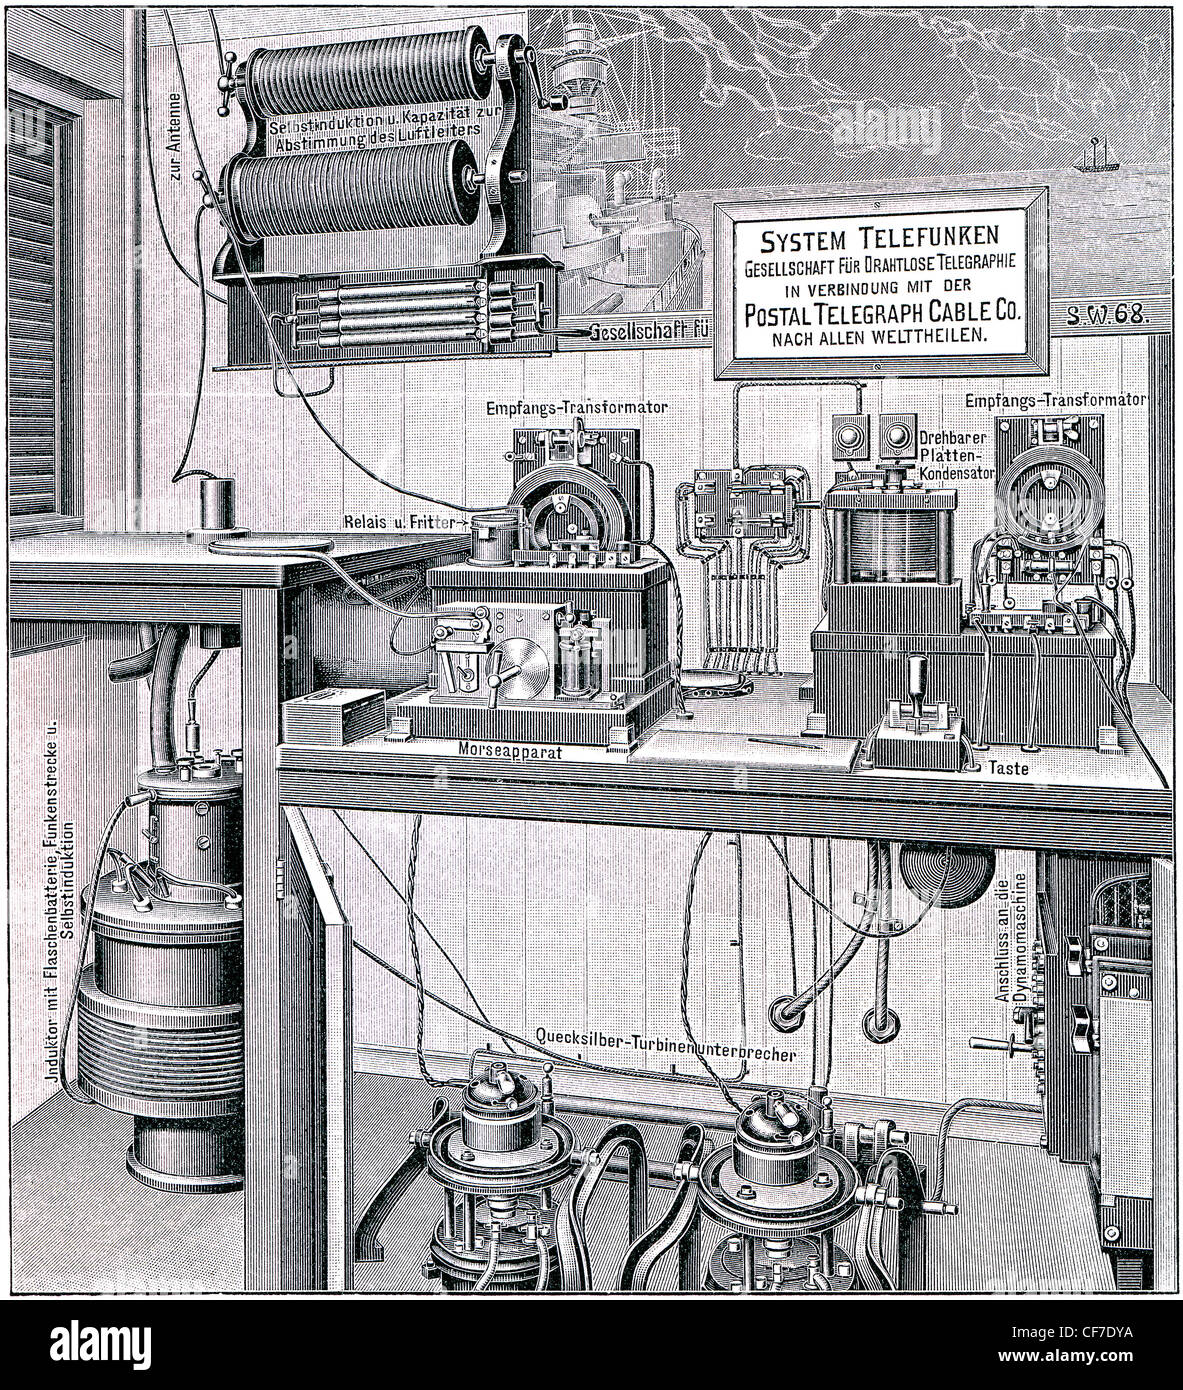 Radio System Telefunken, on the steamer 'Bremen'. Stock Photo